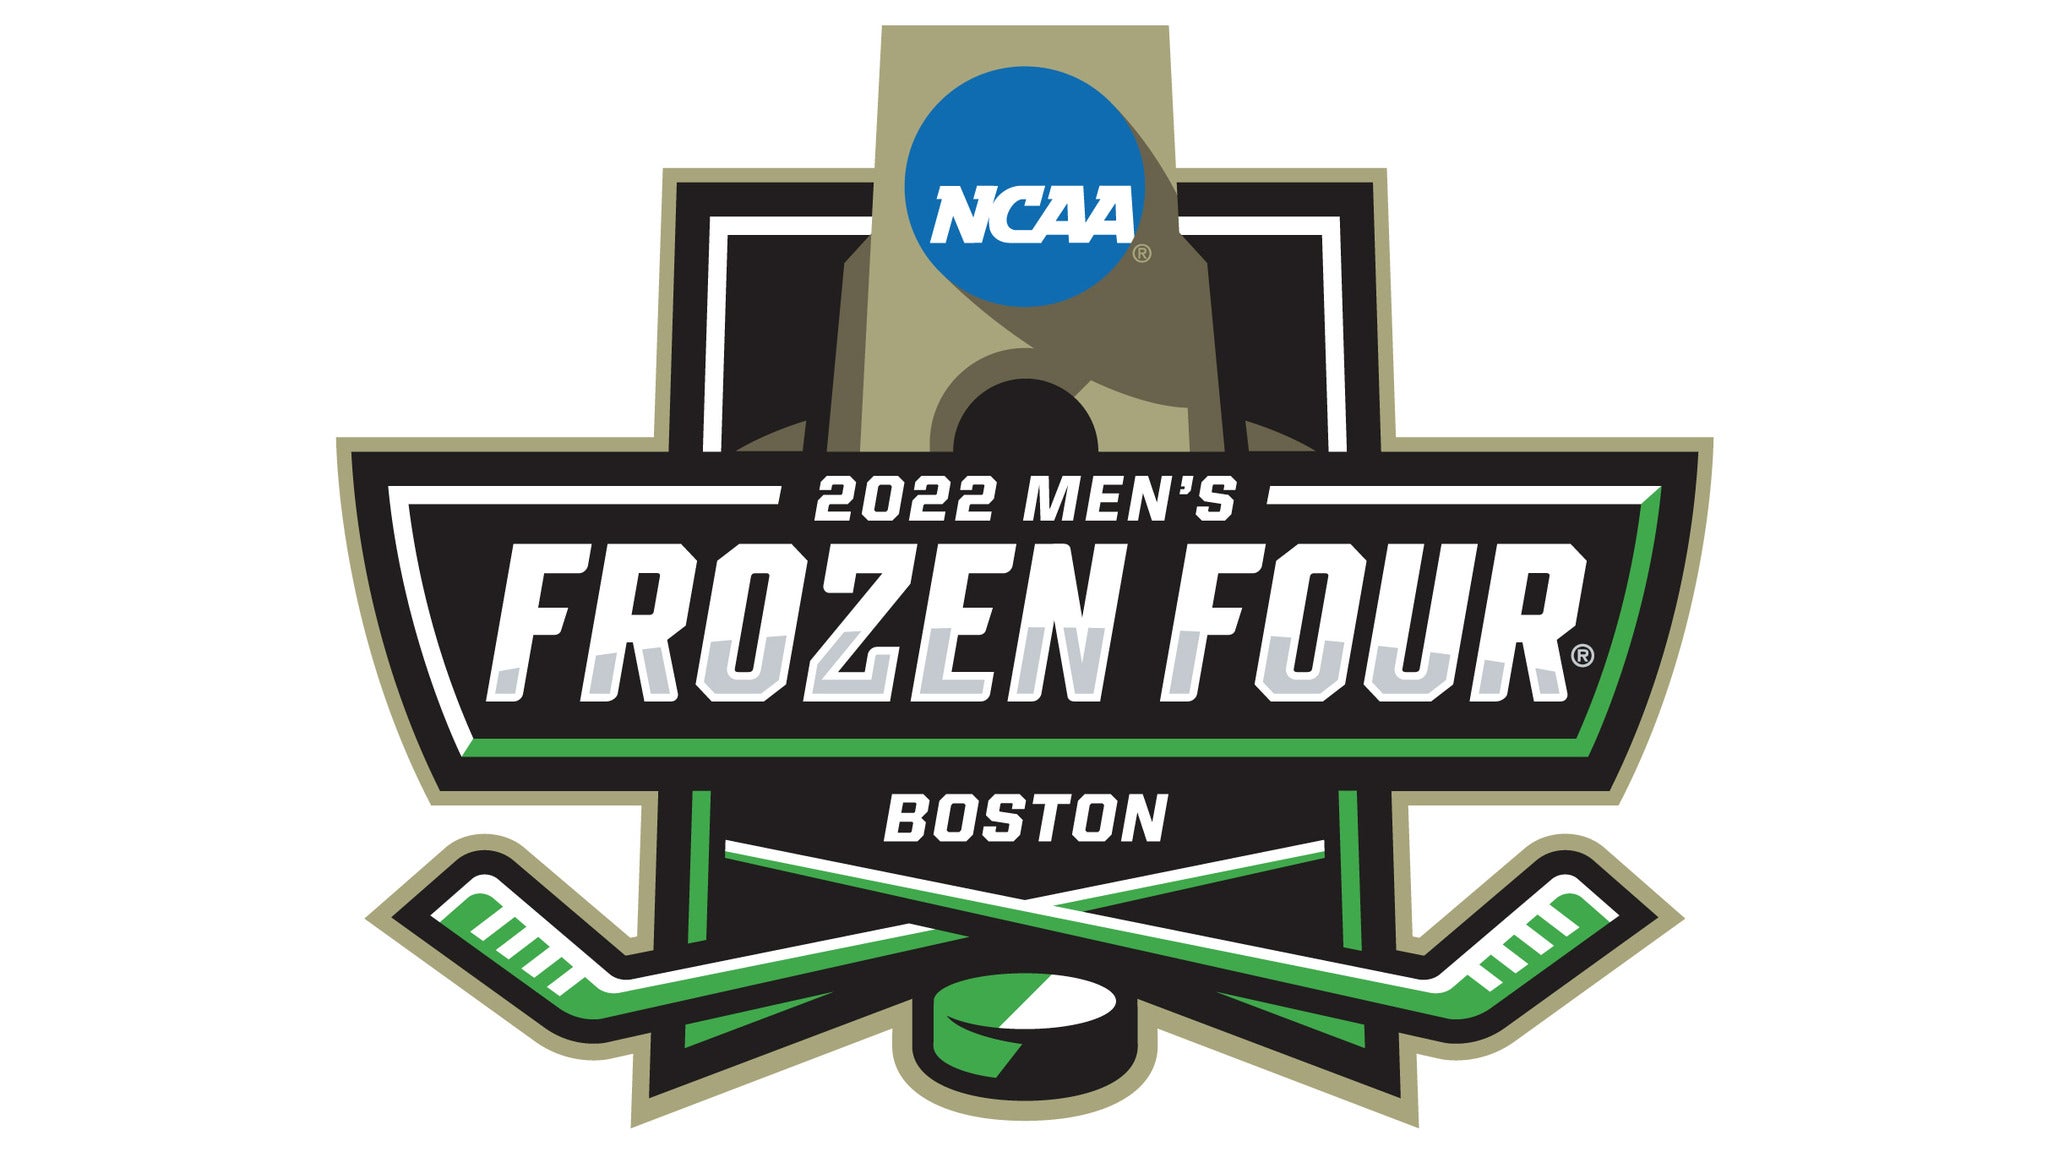 2022 NCAA Division I Men's Frozen Four - Semifinals in Boston promo photo for Ticketmaster Promo presale offer code